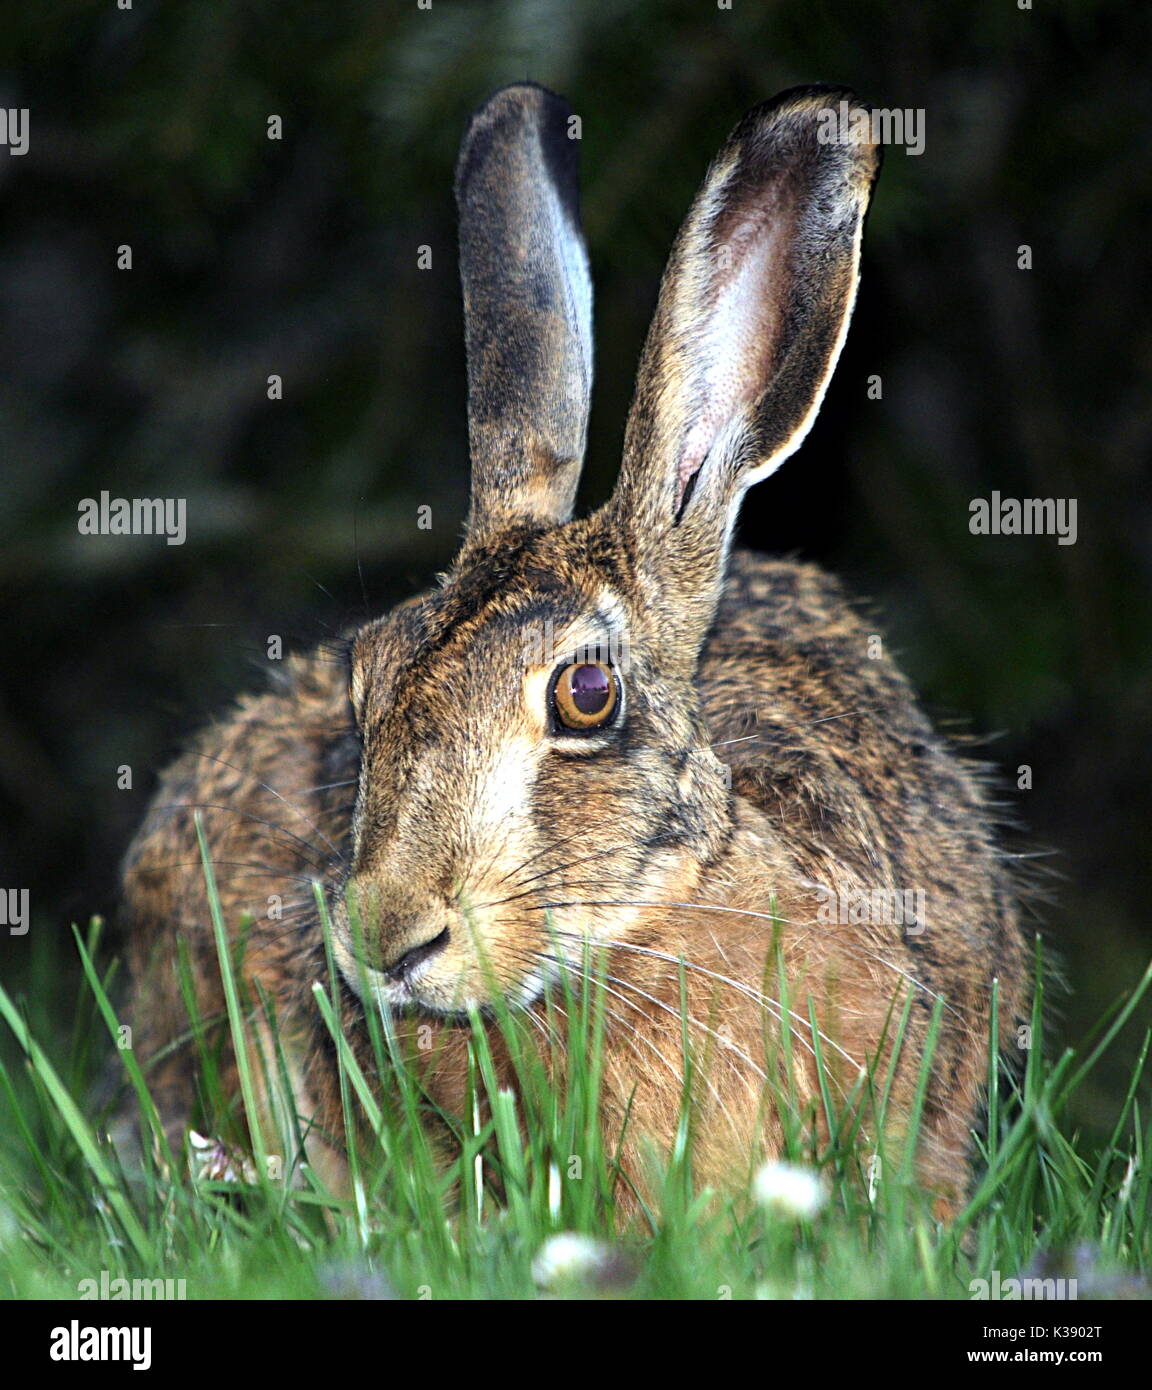 Adult Hare Headshot on grass Stock Photo